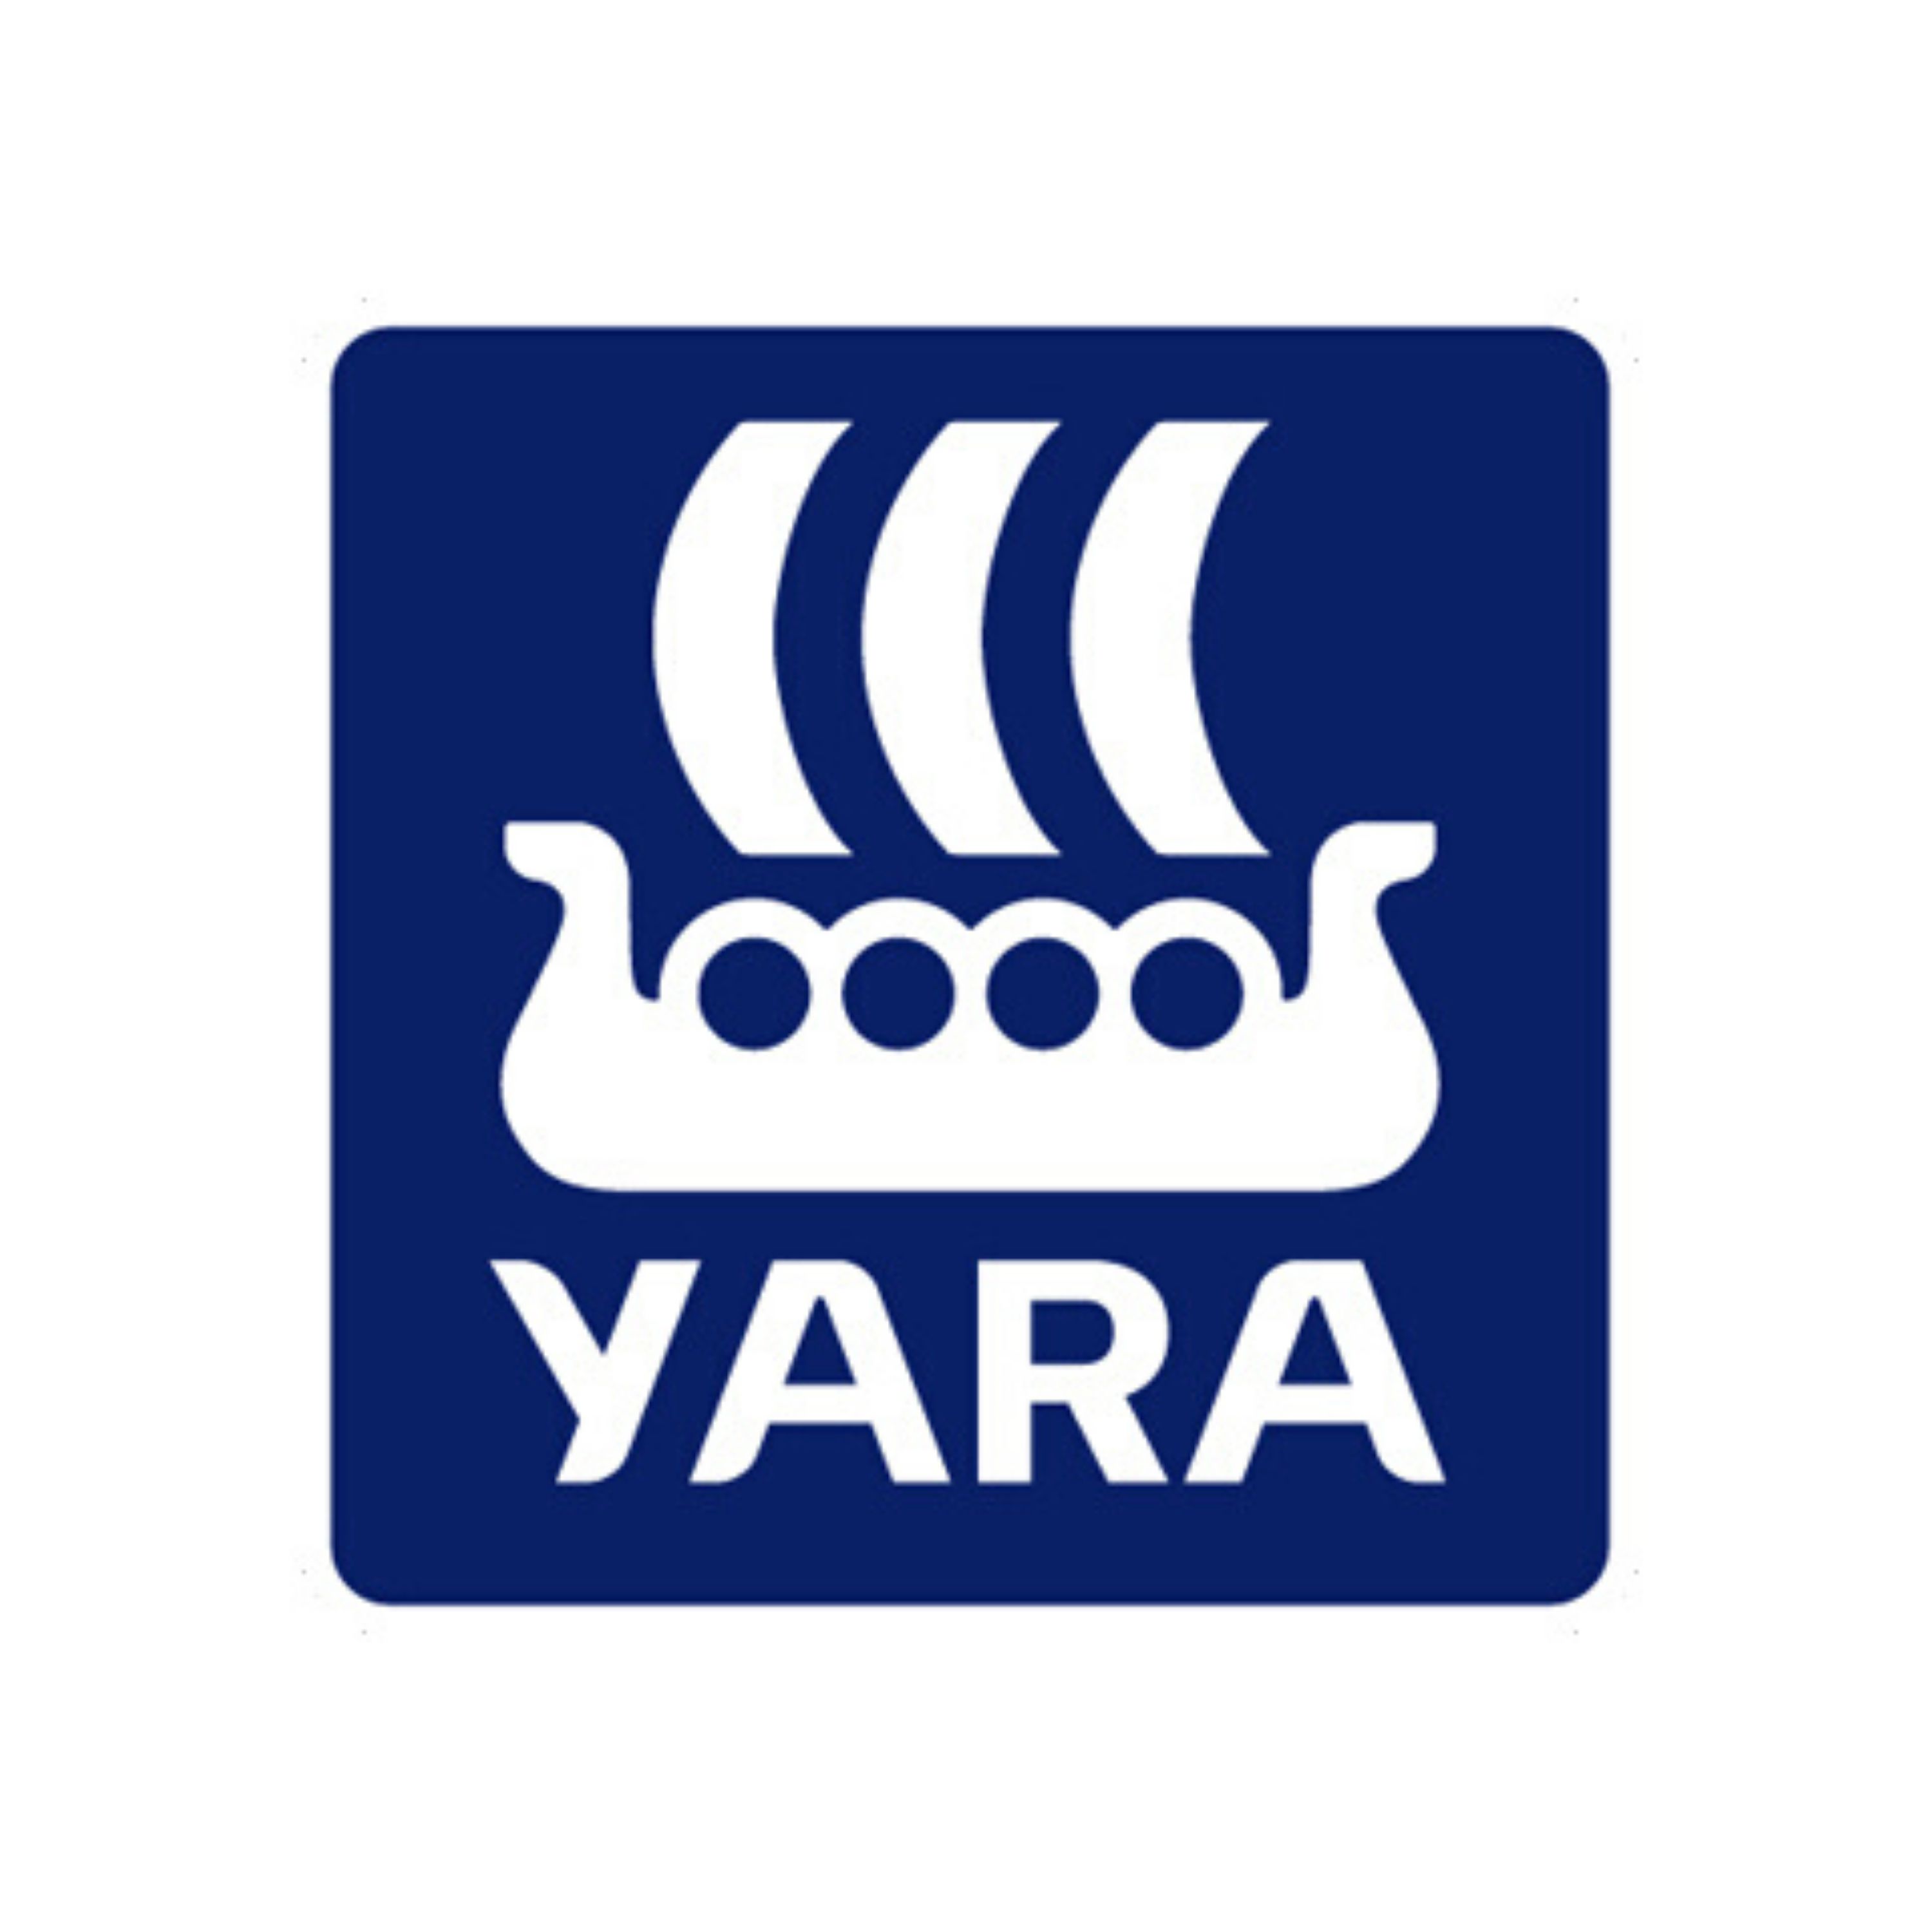 Yara Tip - Tips prácticos e importancia del análisis foliar